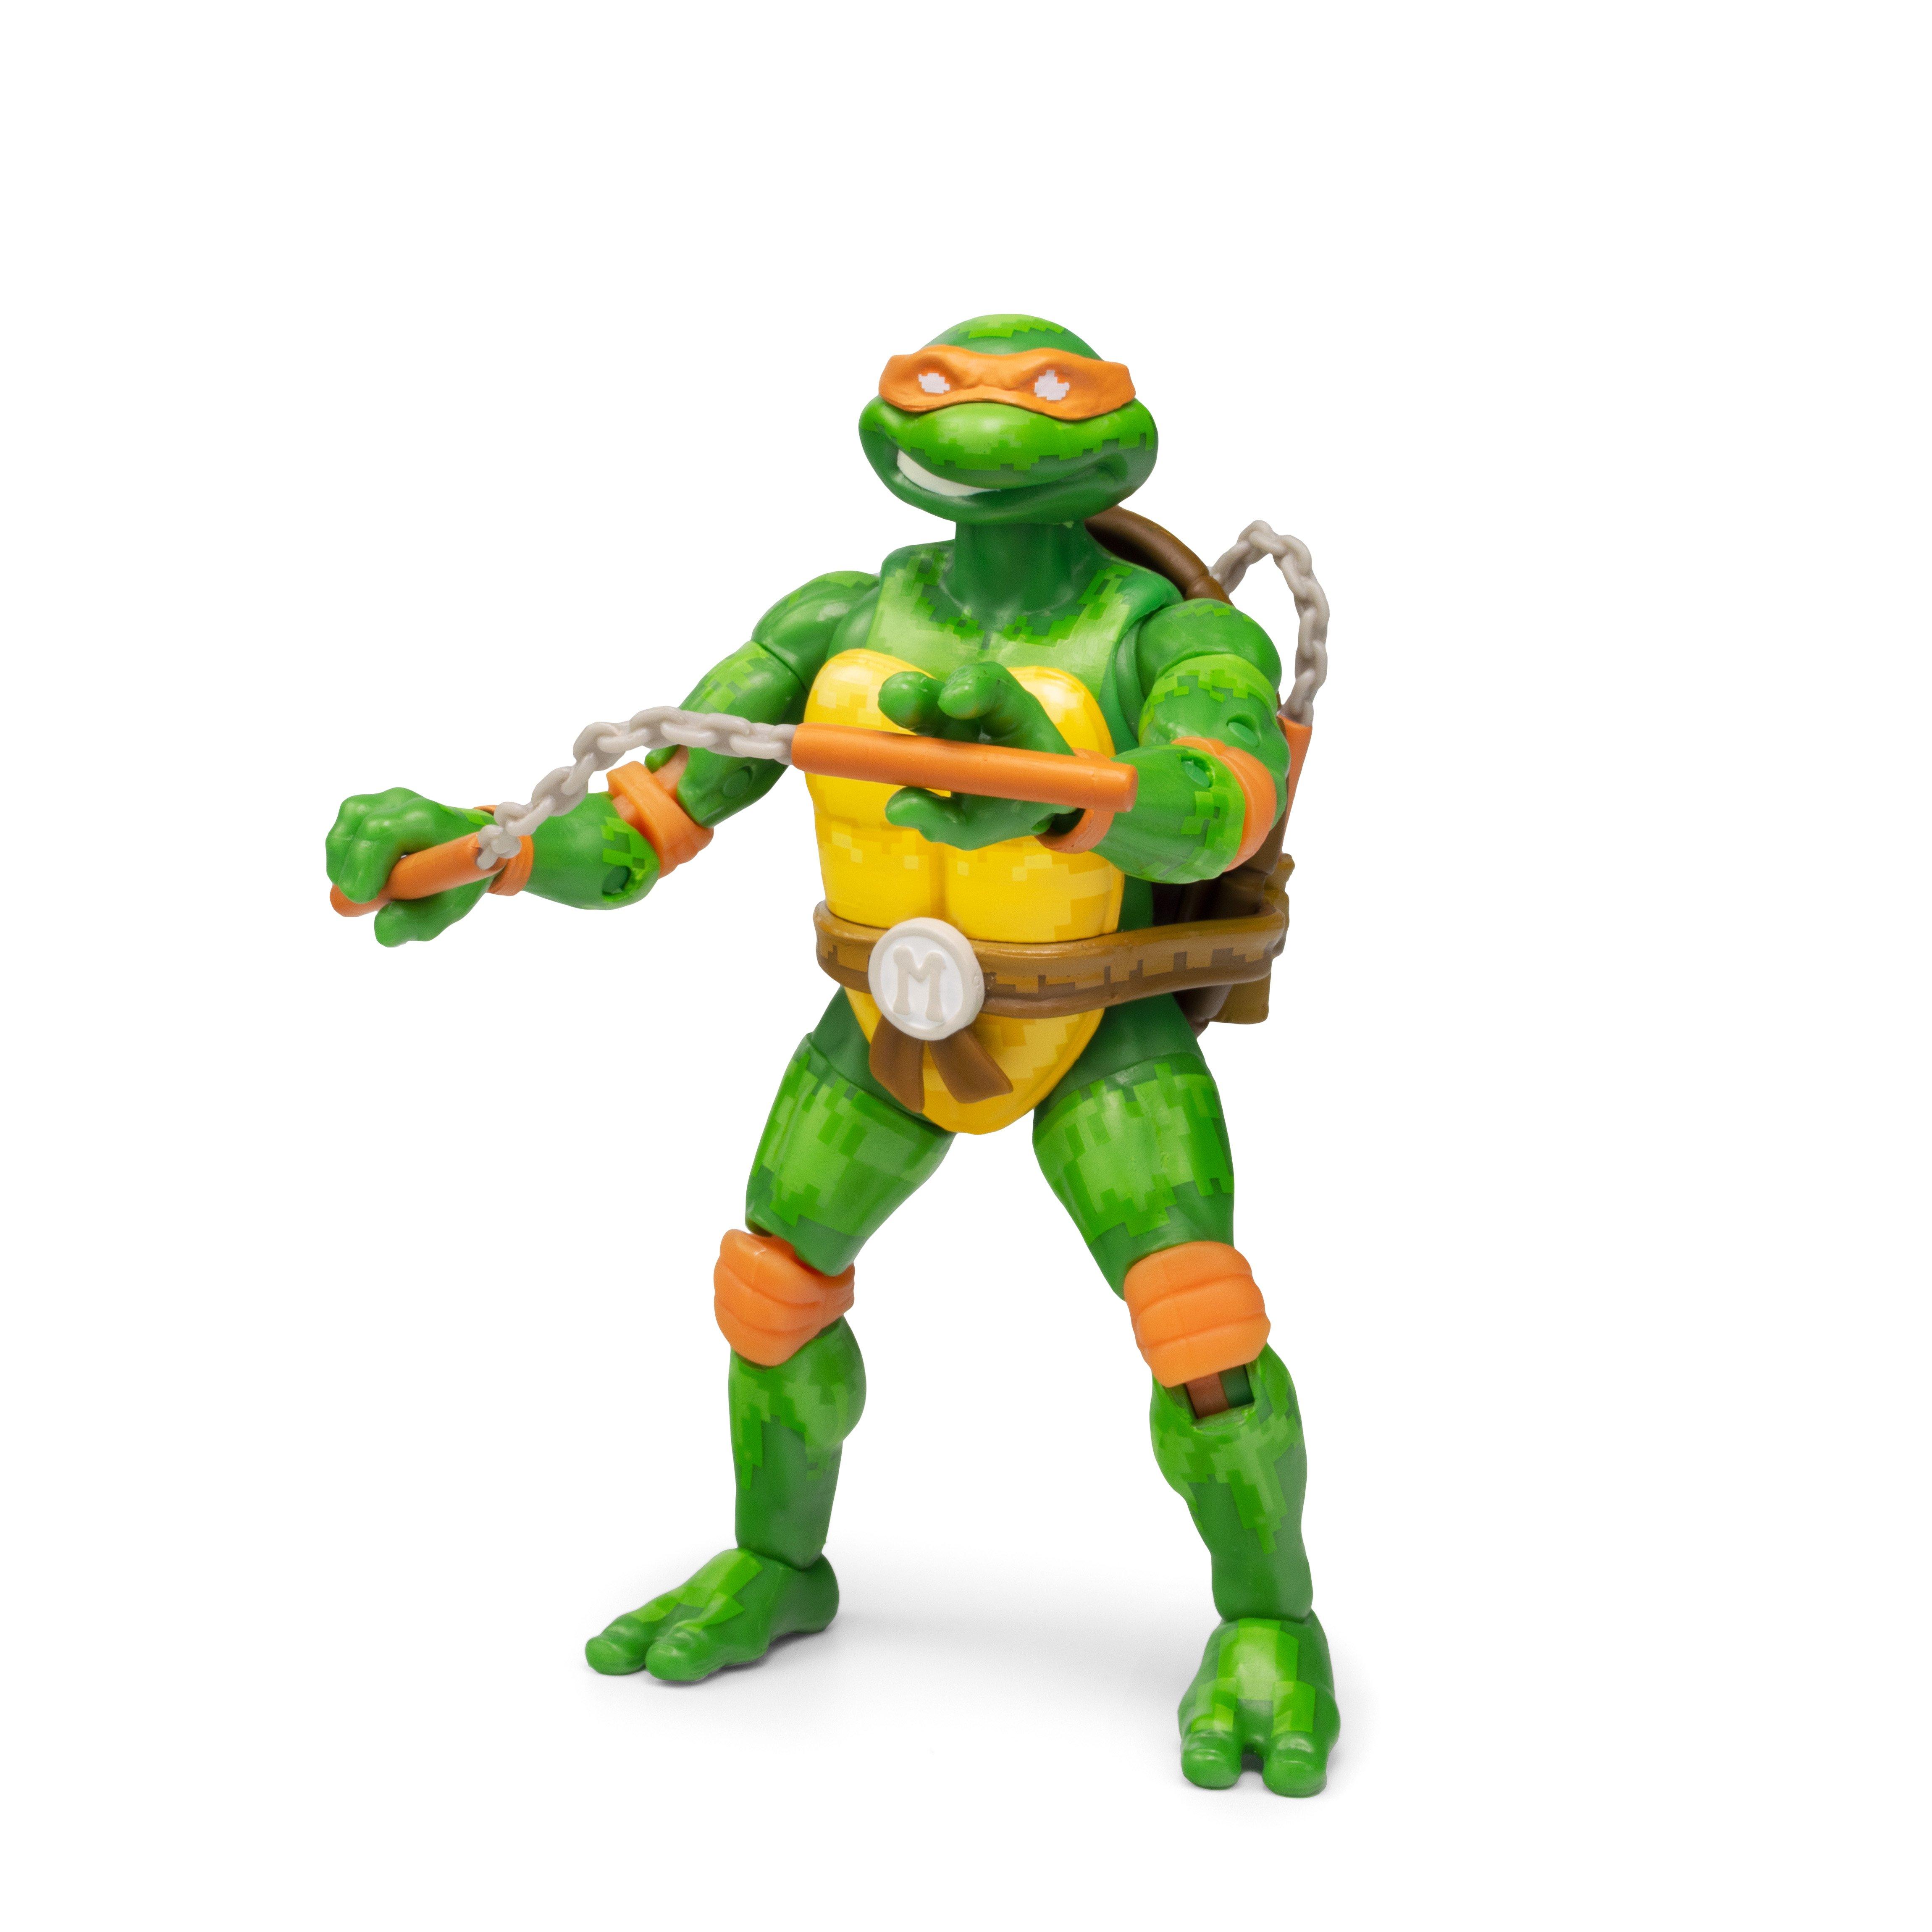 The Loyal Subjects Teenage Mutant Ninja Turtles Michelangelo Arcade Game BST AXN 5-in Action Figure GameStop Exclusive